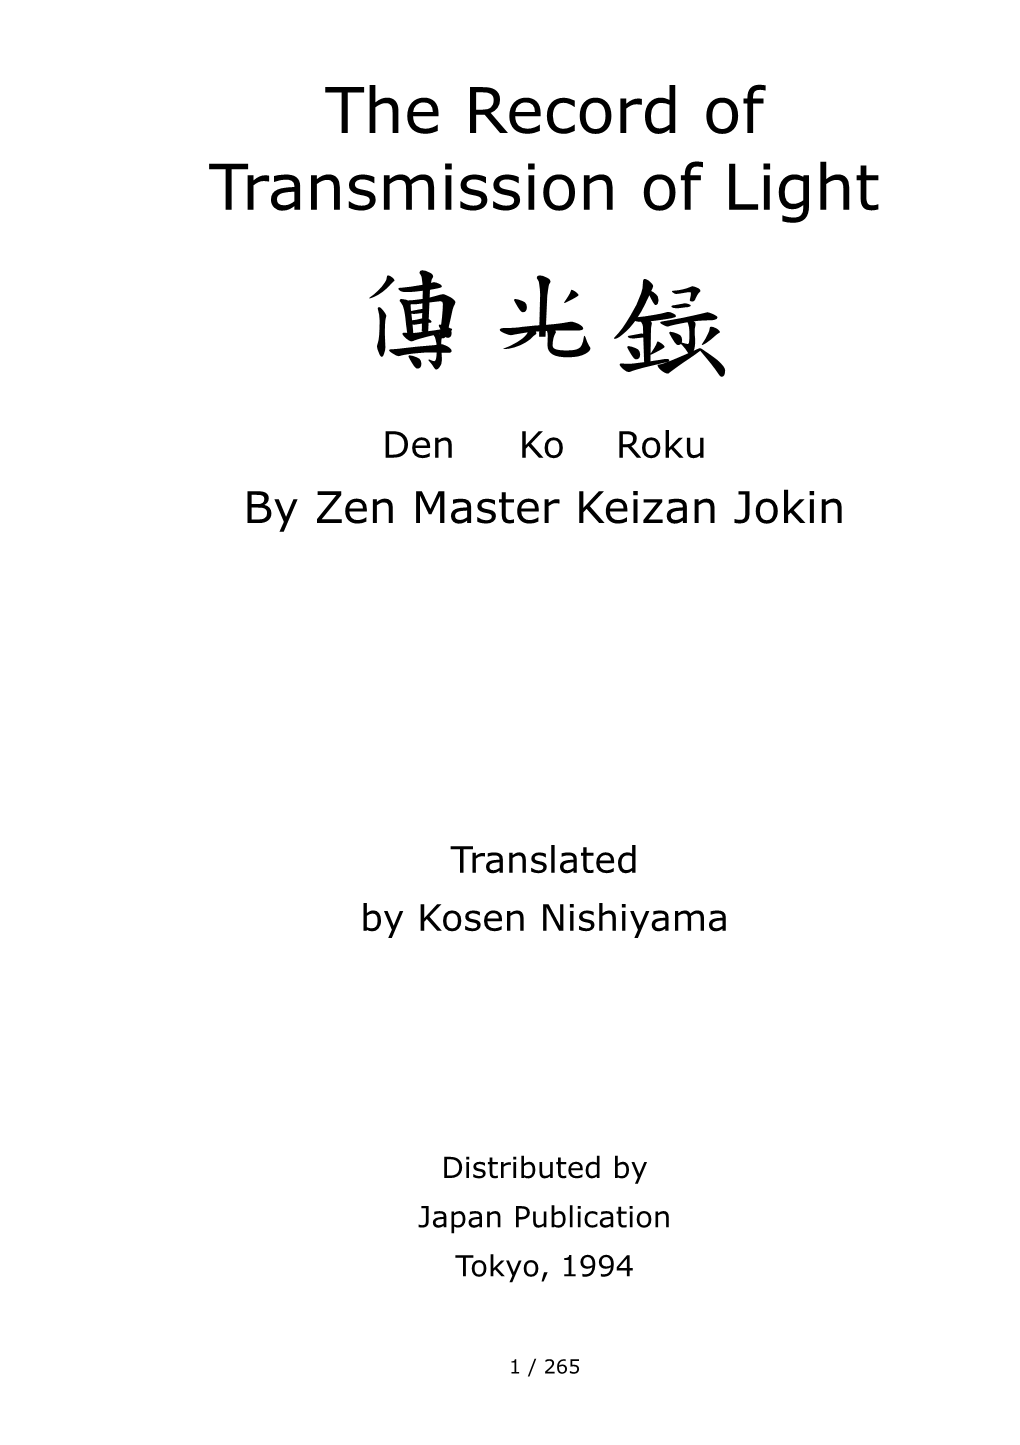 傳光録 Den Ko Roku by Zen Master Keizan Jokin